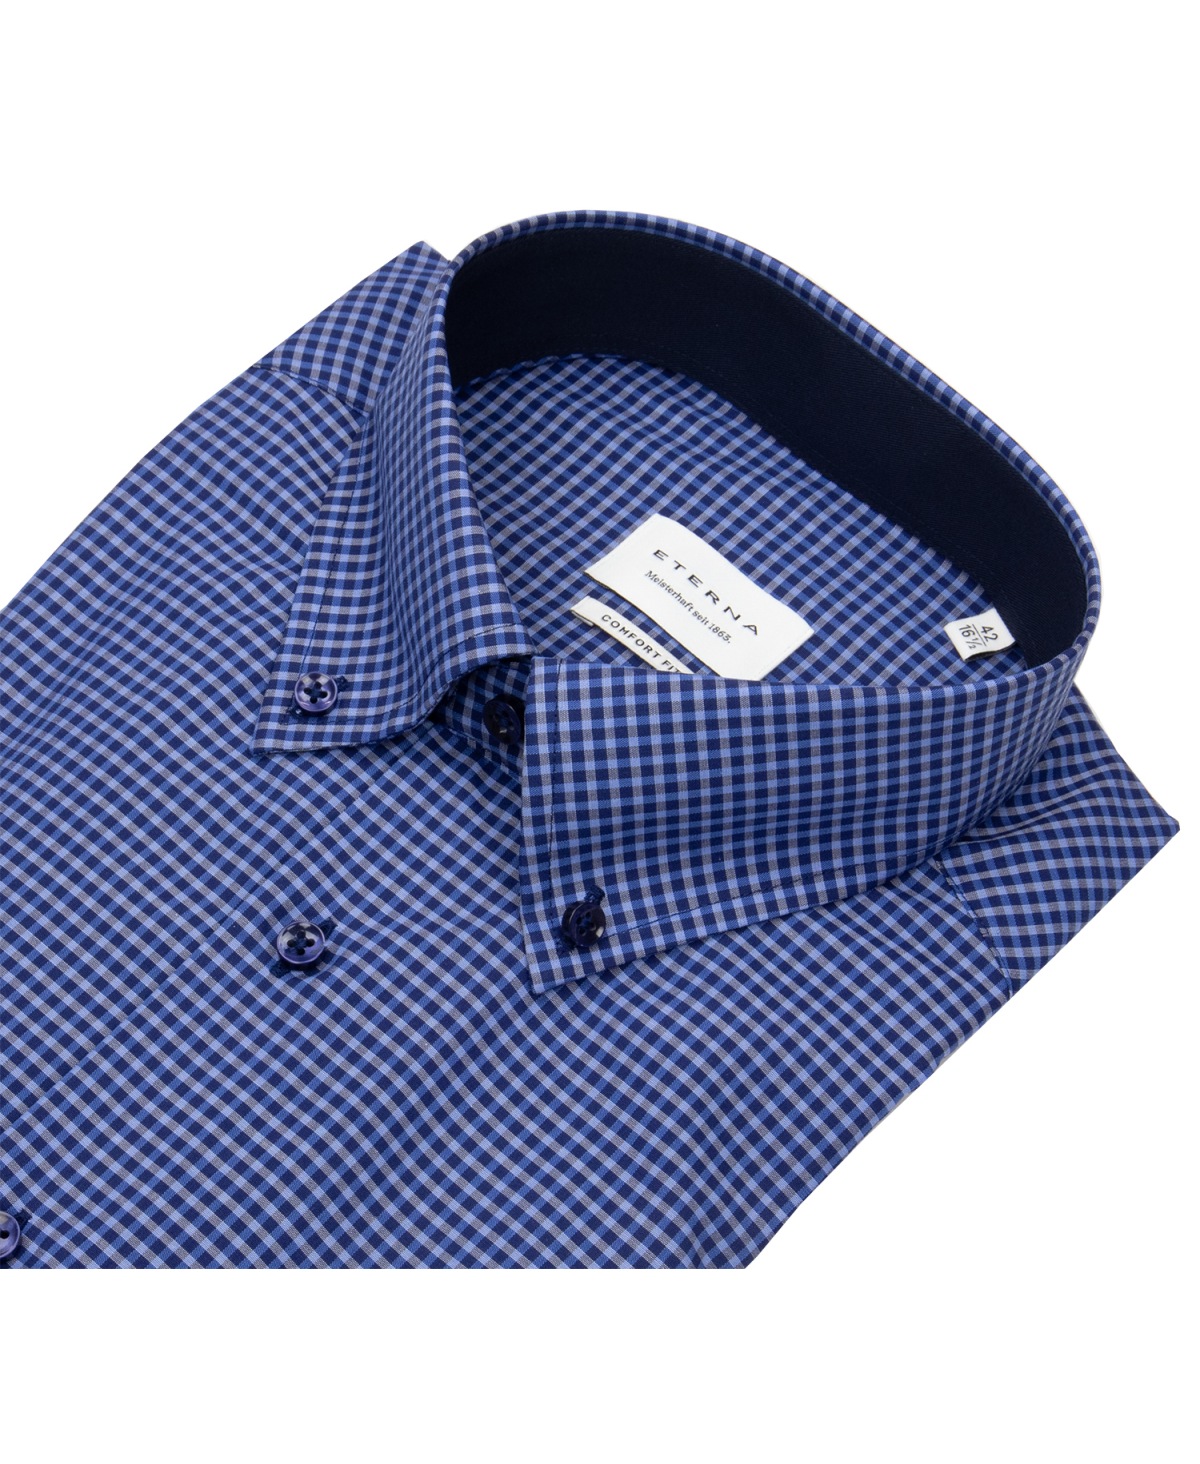 Eterna Hemd - Comfort Fit - Button Down - blau / dunkelblau